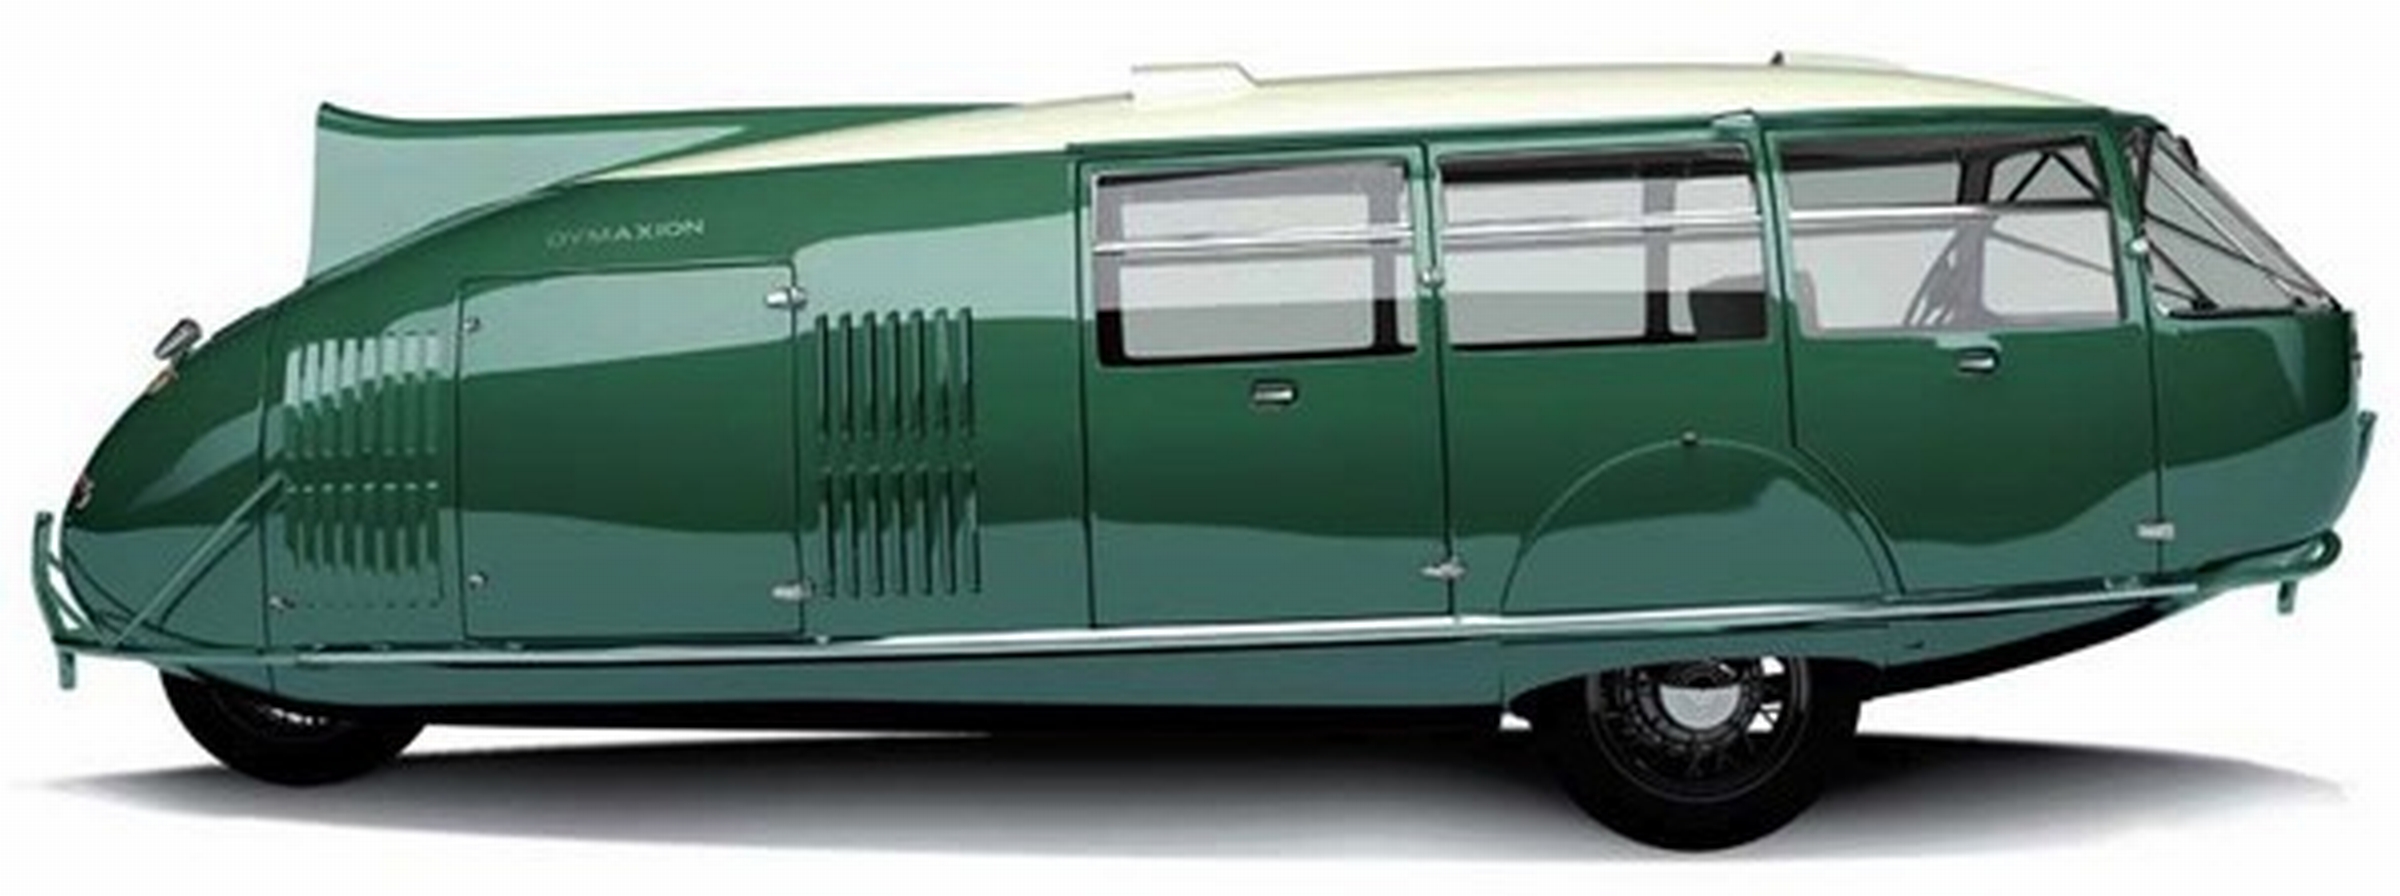 Dymaxion Car - green.jpg